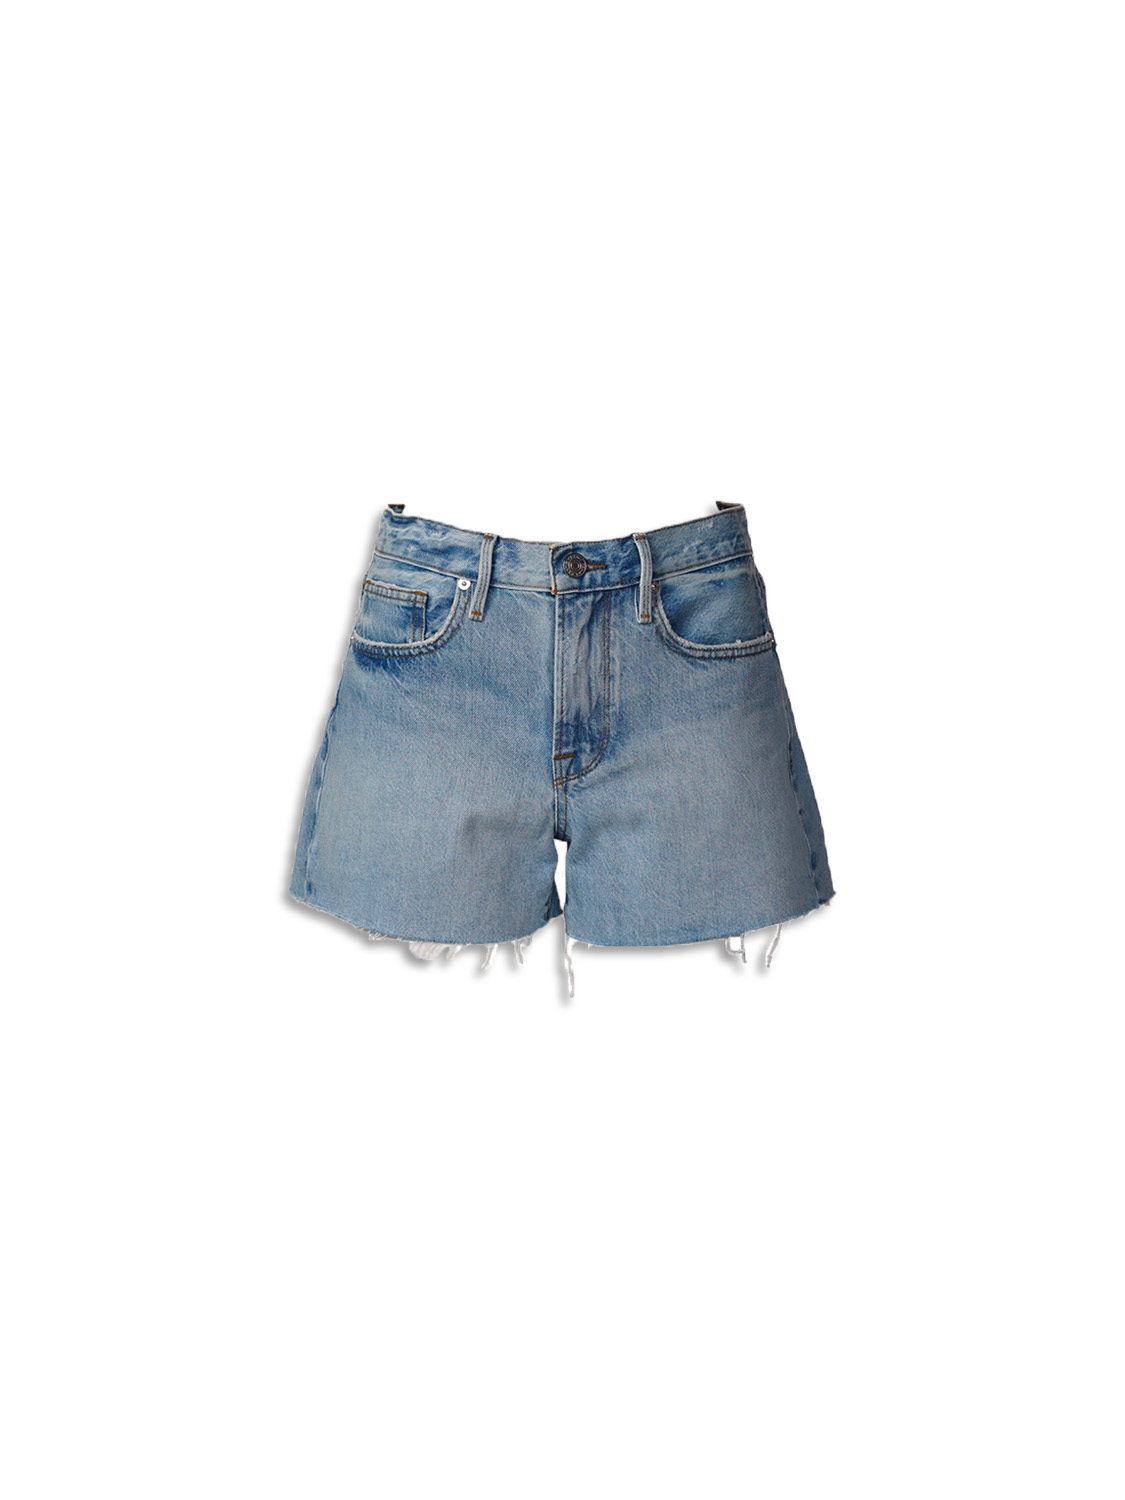 Le Brigette Short - Jean shorts with destroyed details